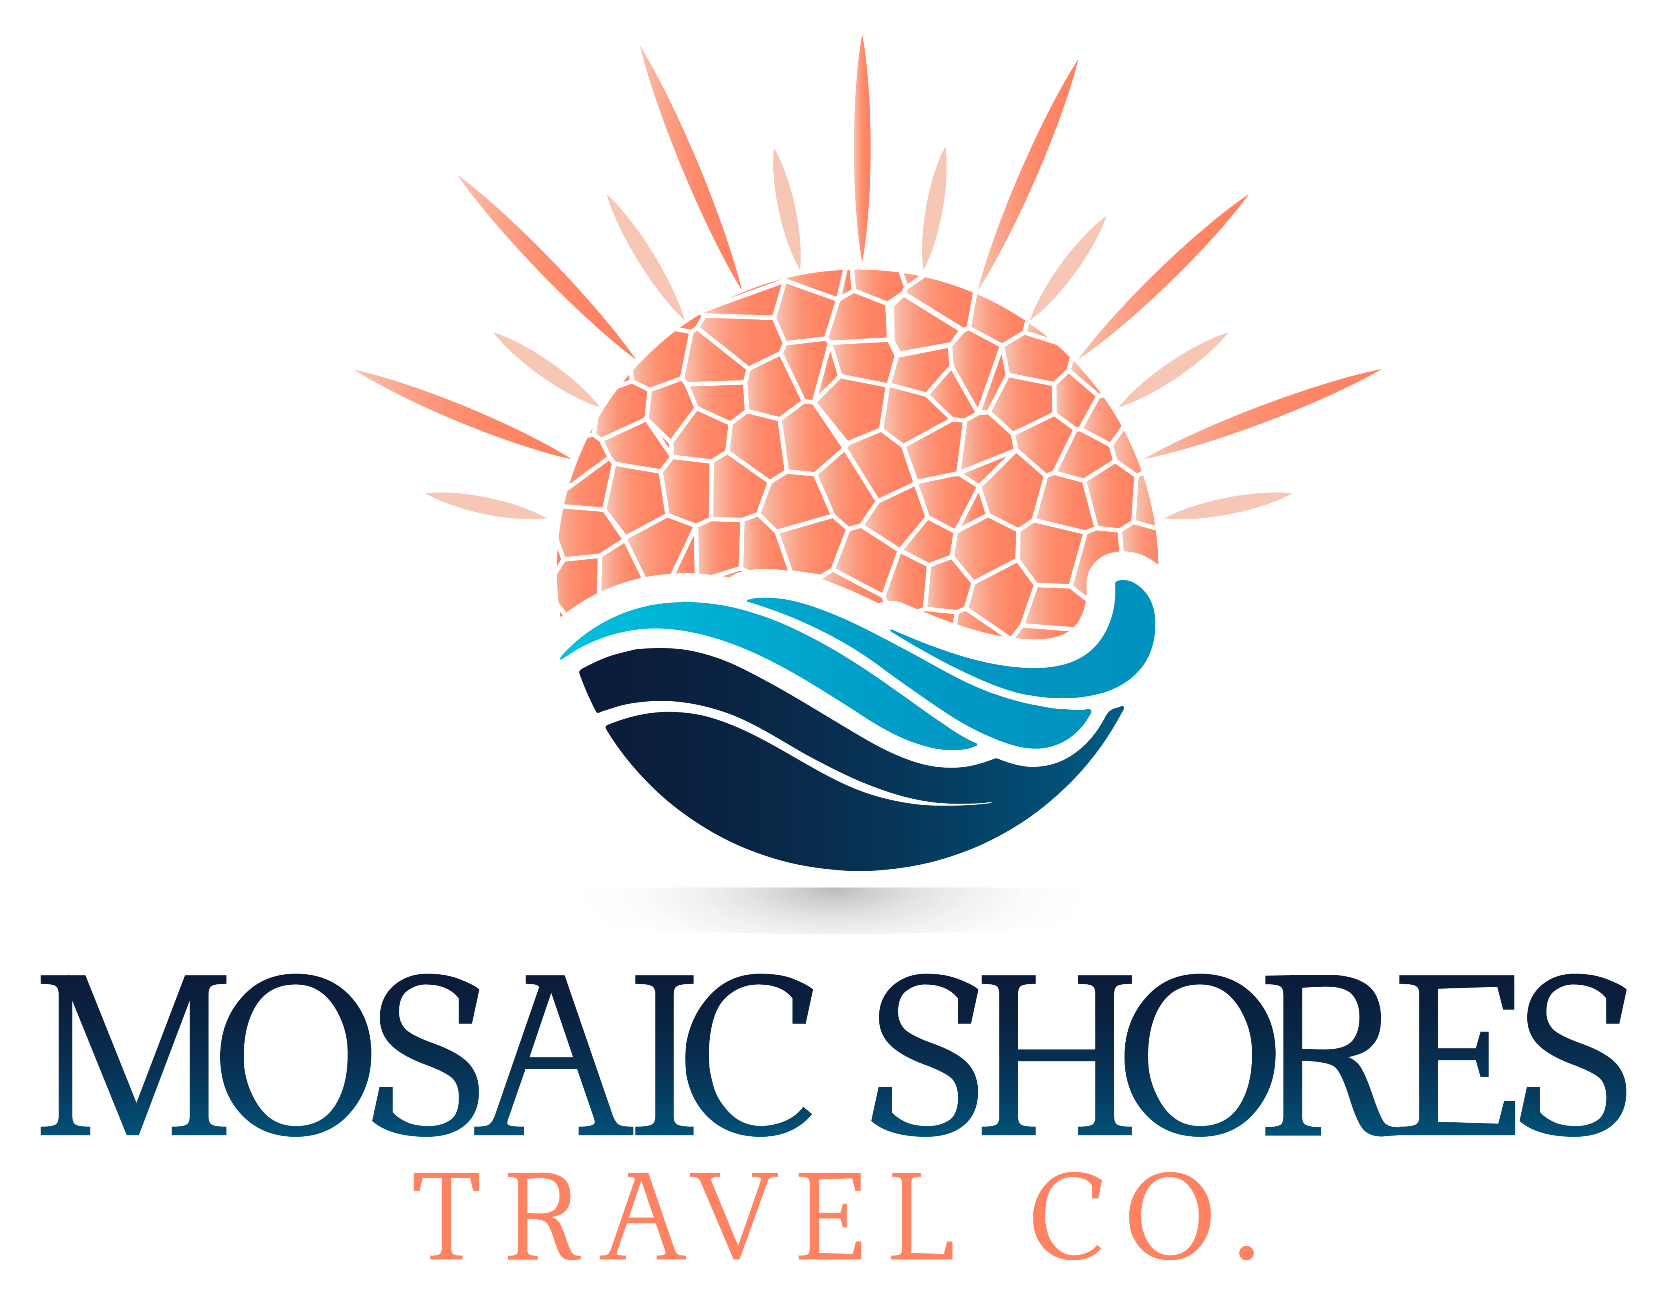 Mosaic Shores Travel Co.